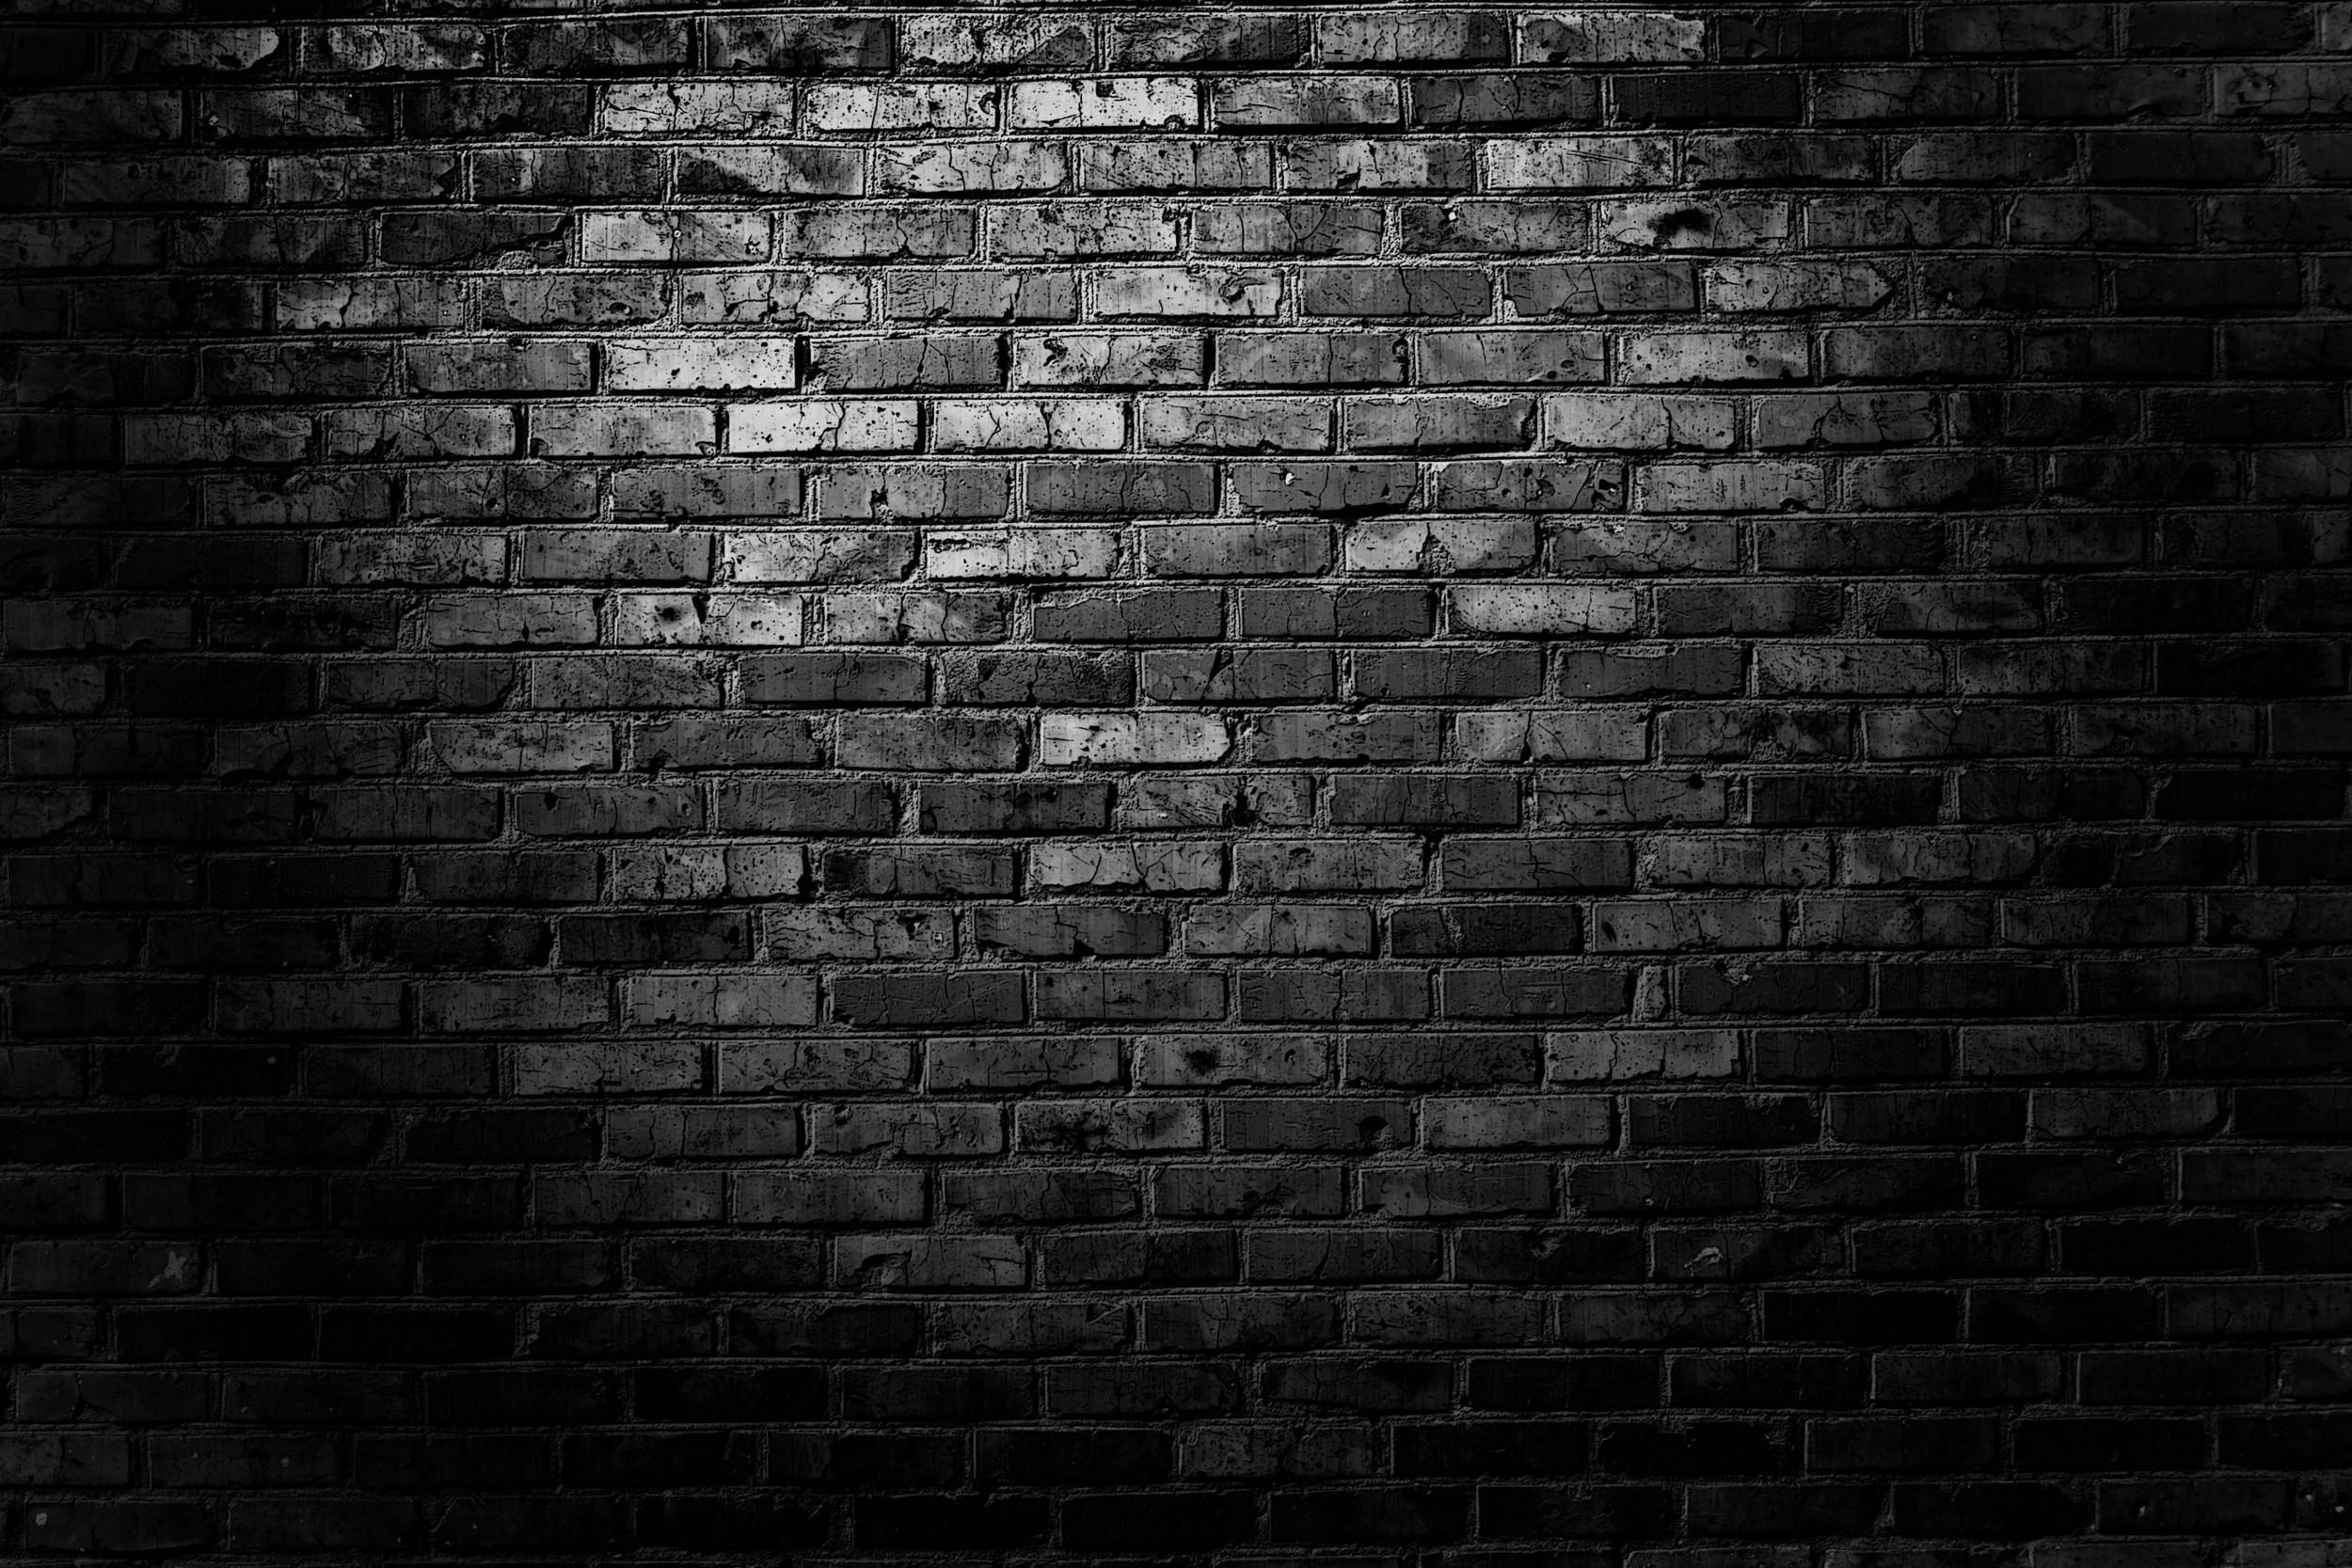 wallpaper for bedroom walls india,brickwork,wall,black,brick,black and white